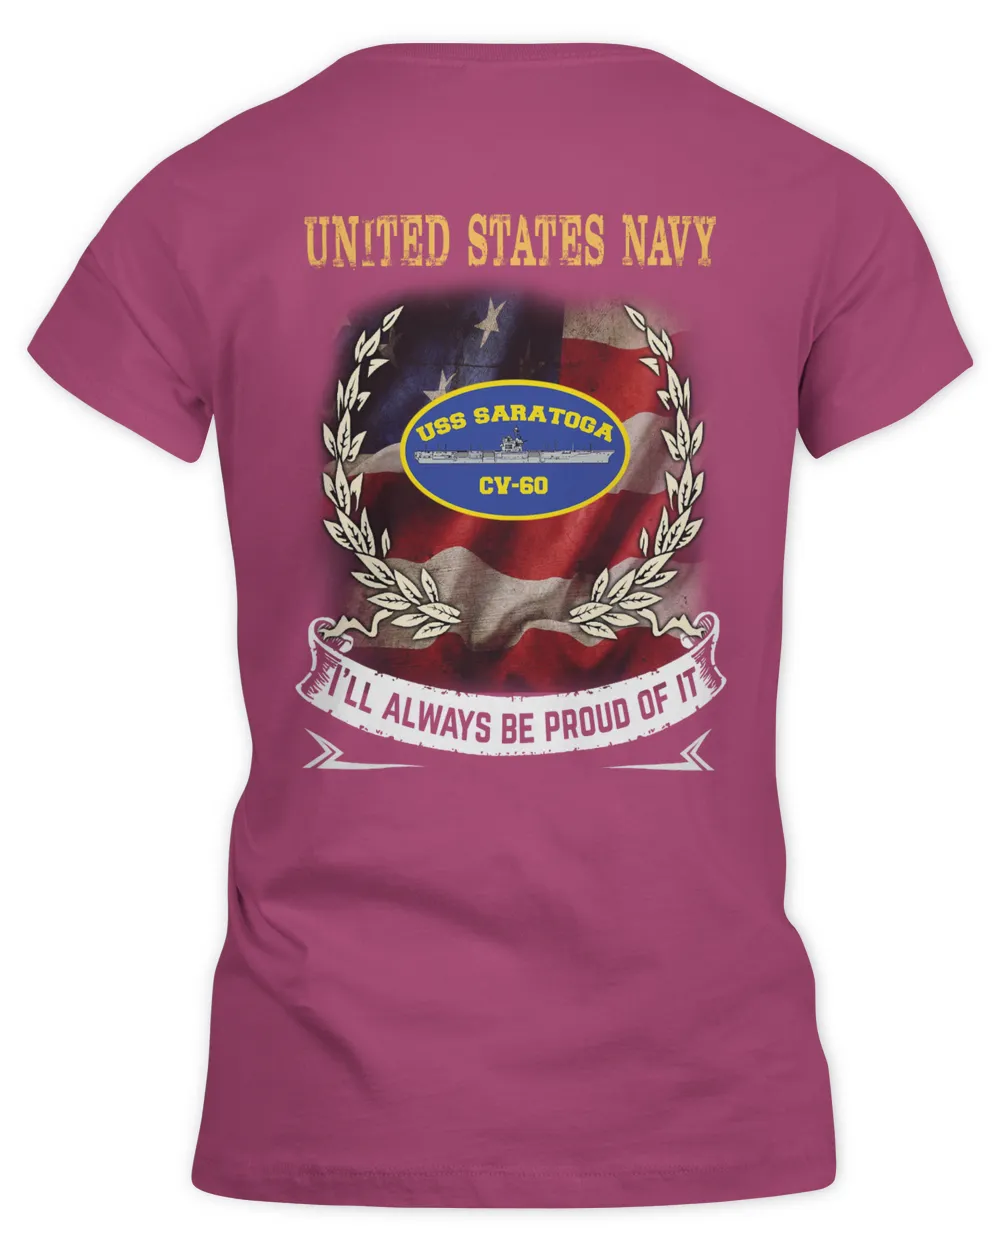 USS Saratoga (CV-60) Tshirt